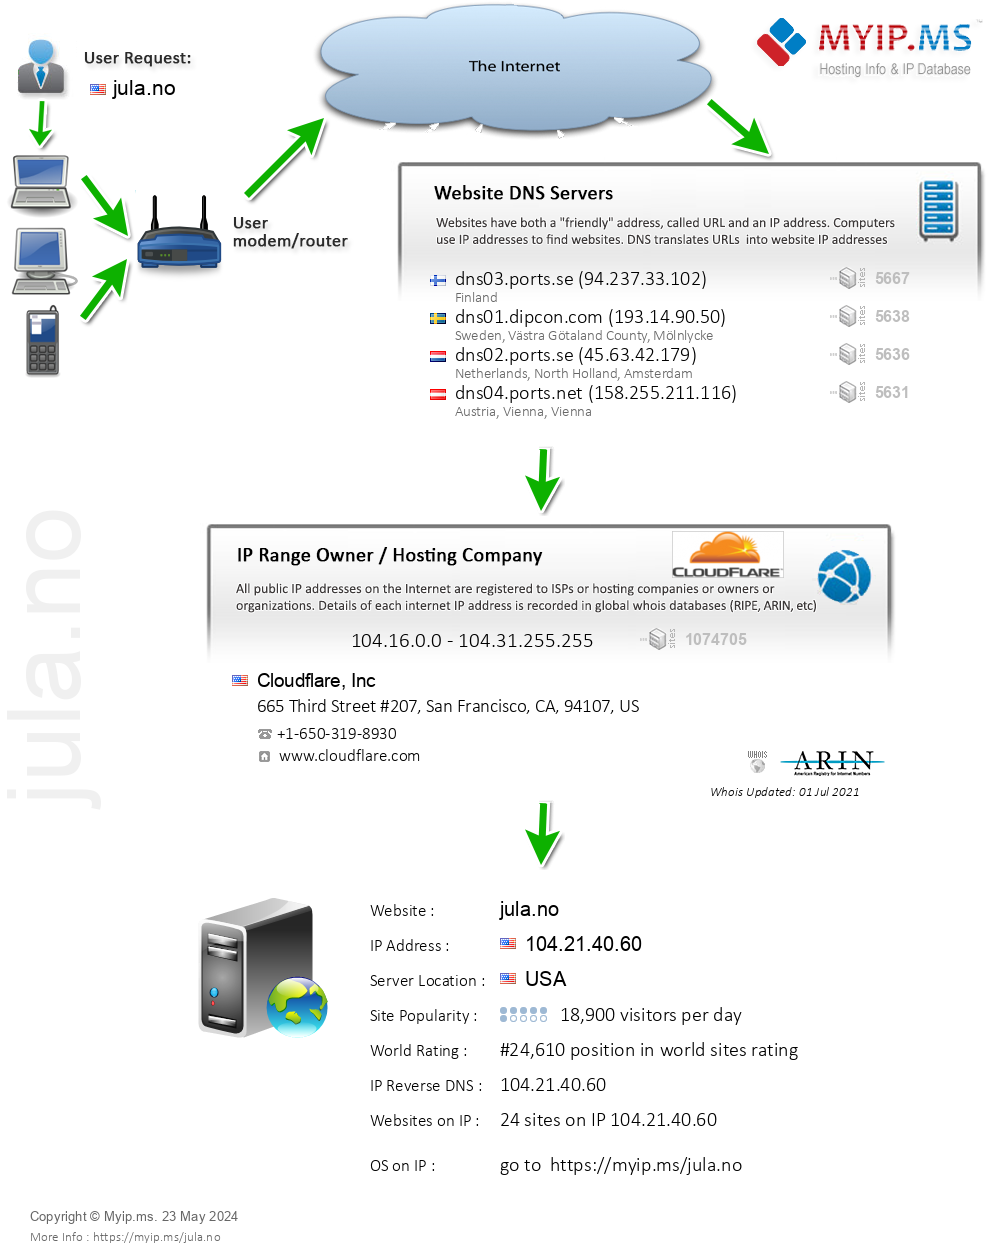 Jula.no - Website Hosting Visual IP Diagram